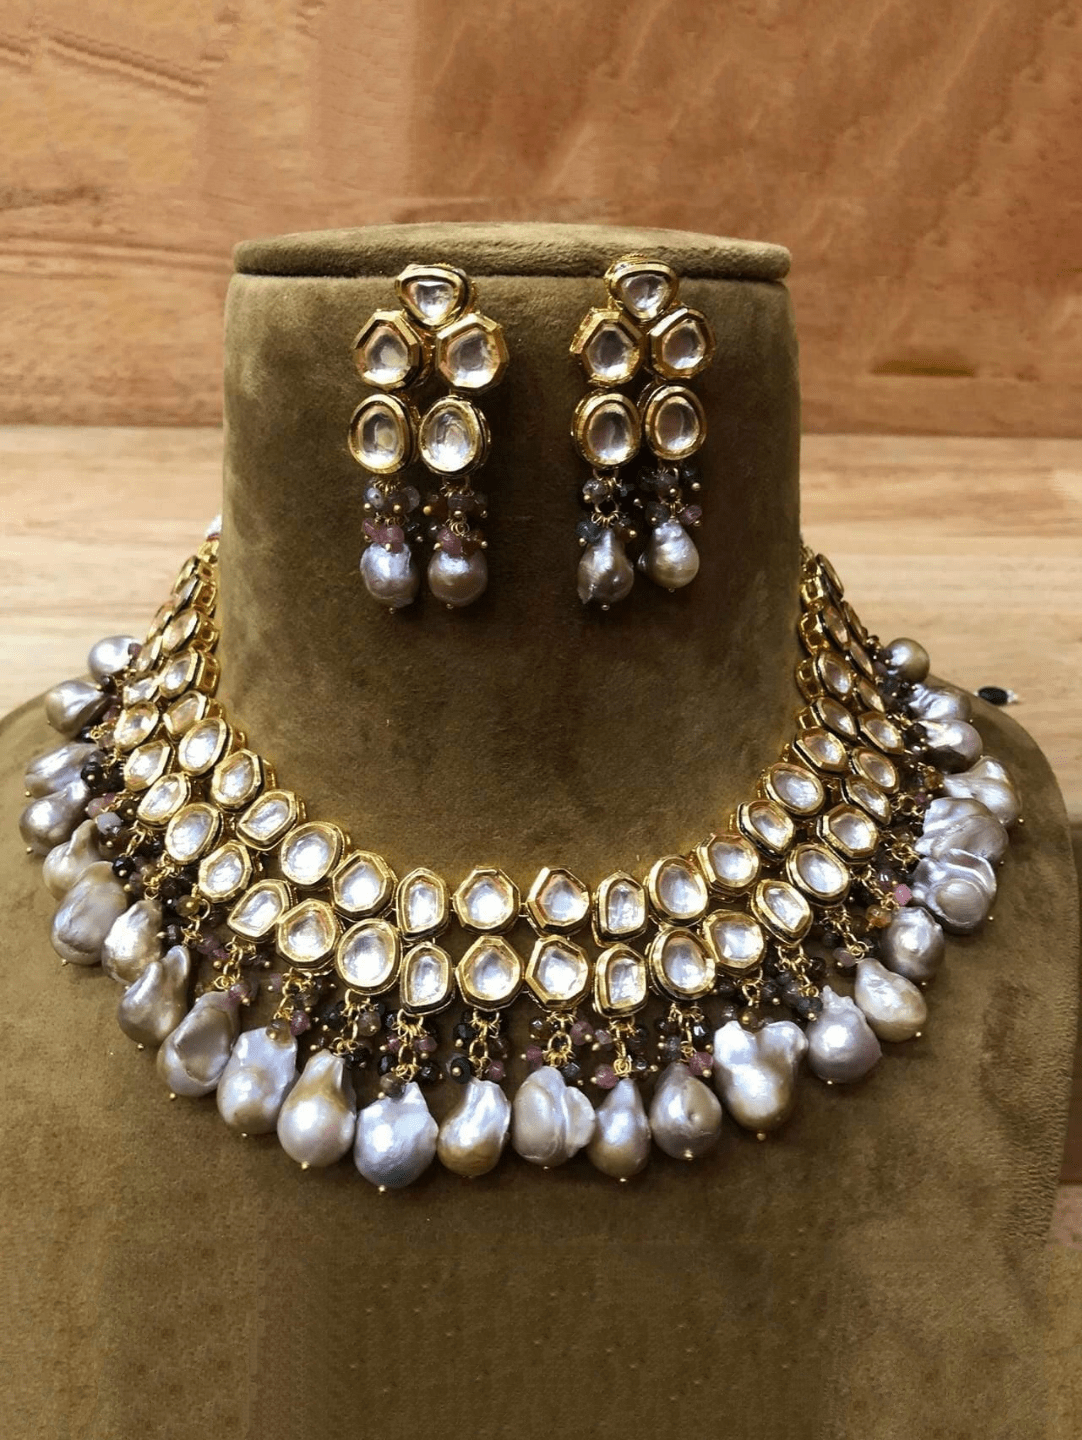 Ishhaara Simple Kundan Necklace With Baroque Beads